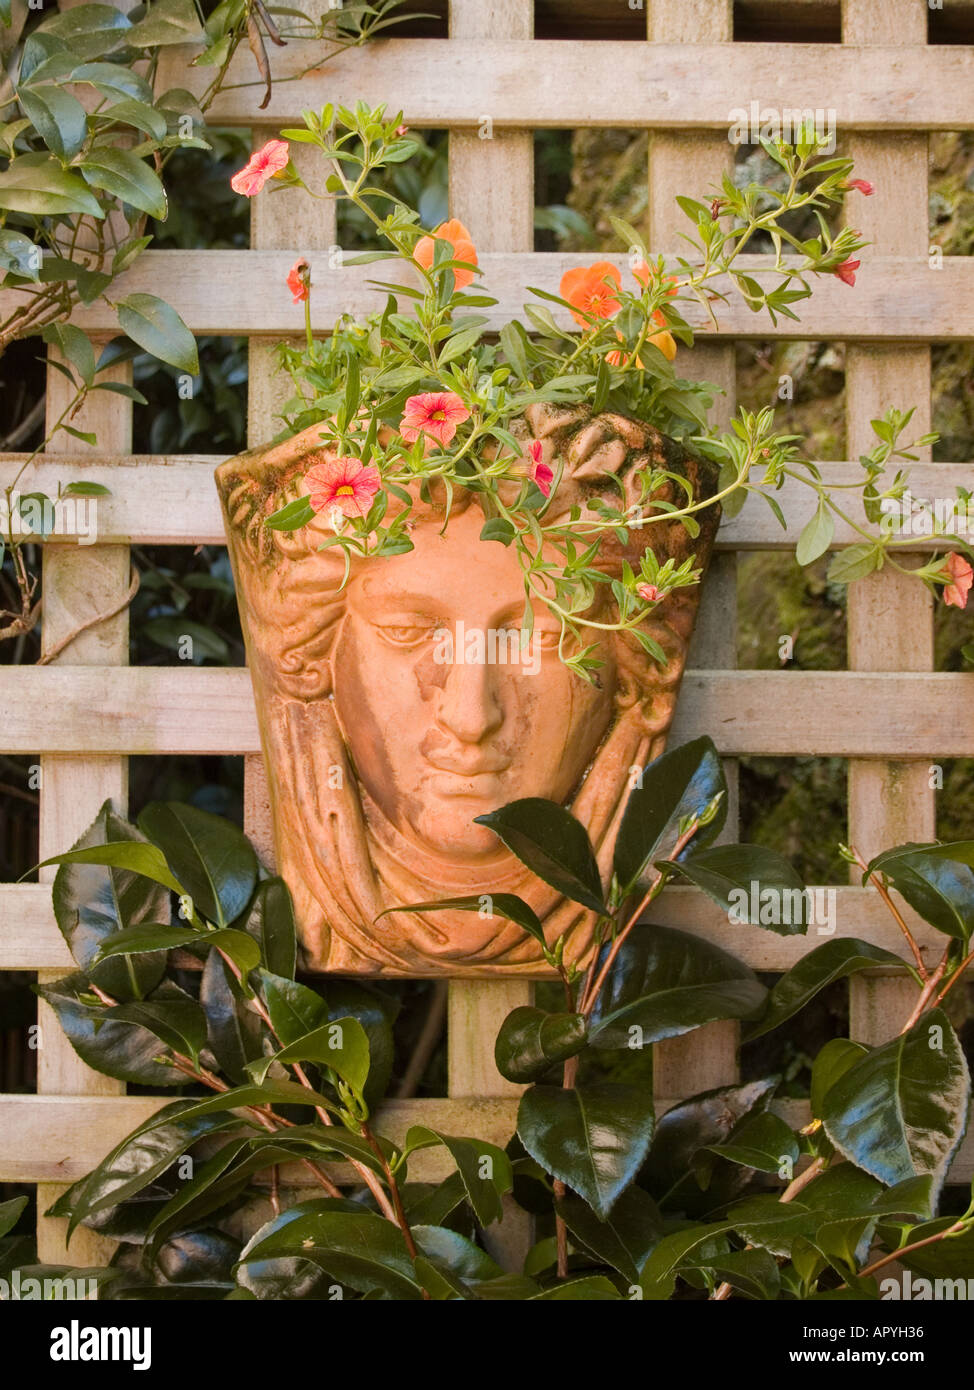 Terracotta wall planter of woman's face with orange violas and tangerine  calibrachoa Stock Photo - Alamy